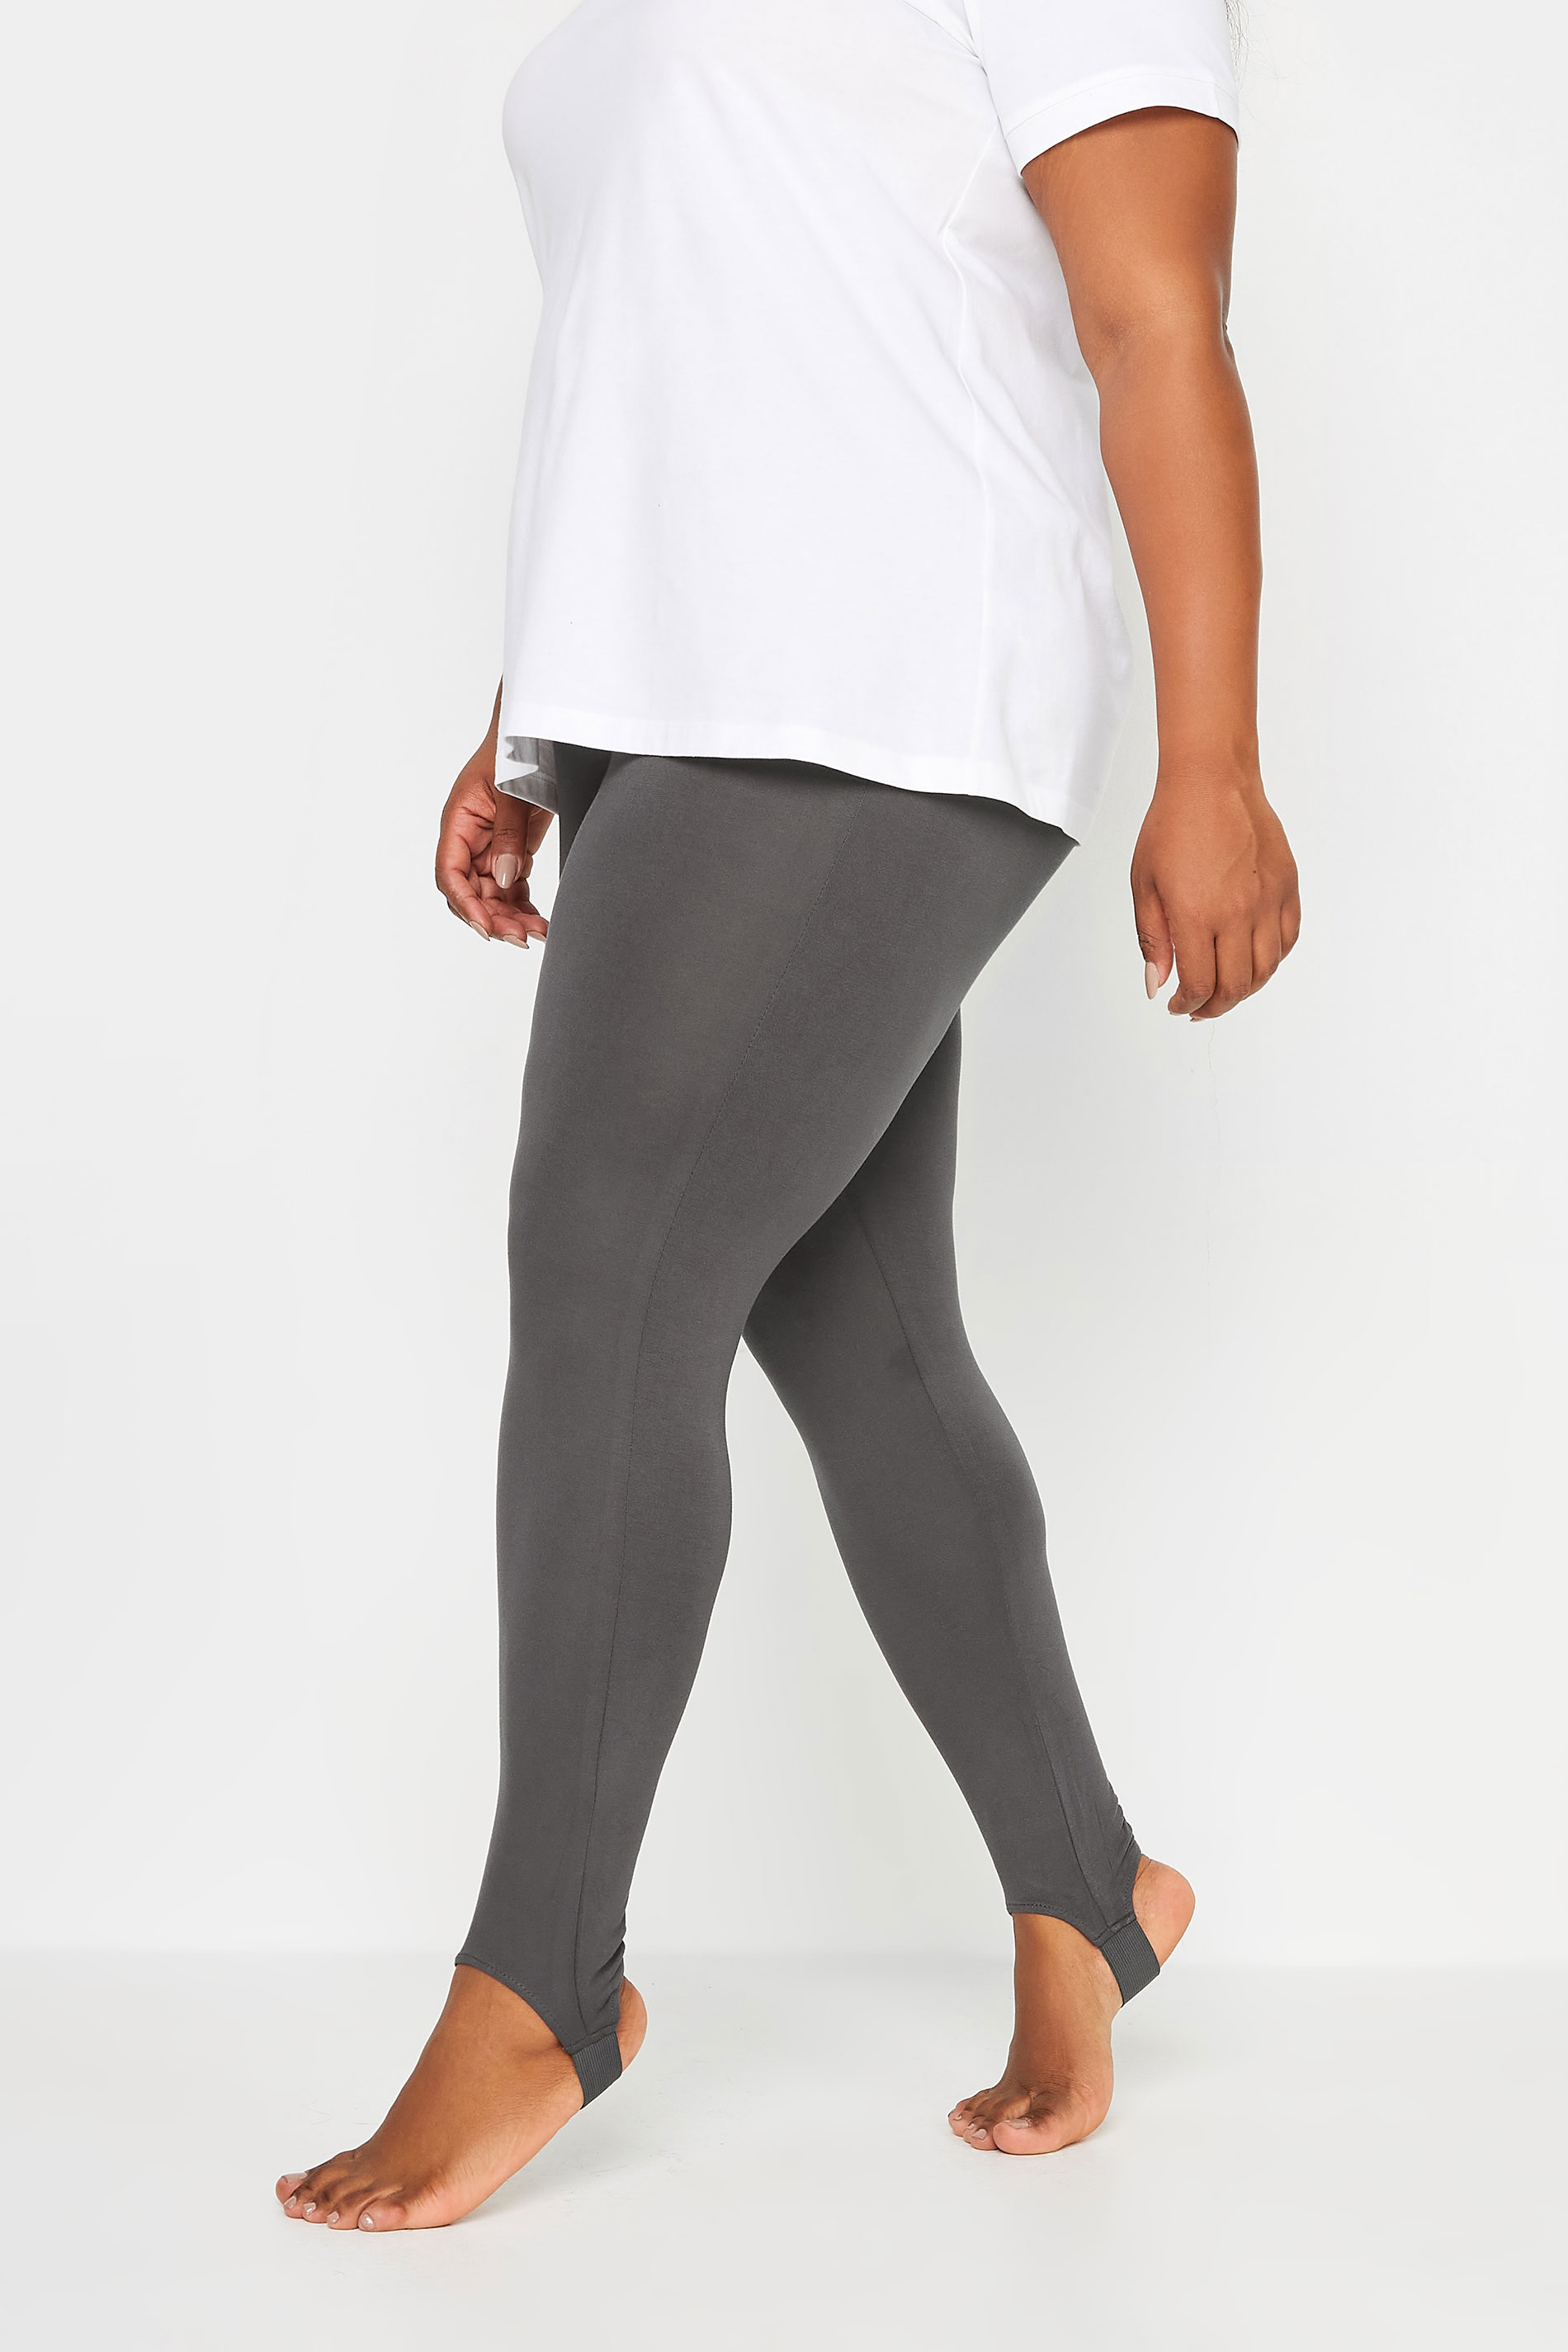 YOURS Plus Size Grey Stirrup Leggings | Yours Clothing 2